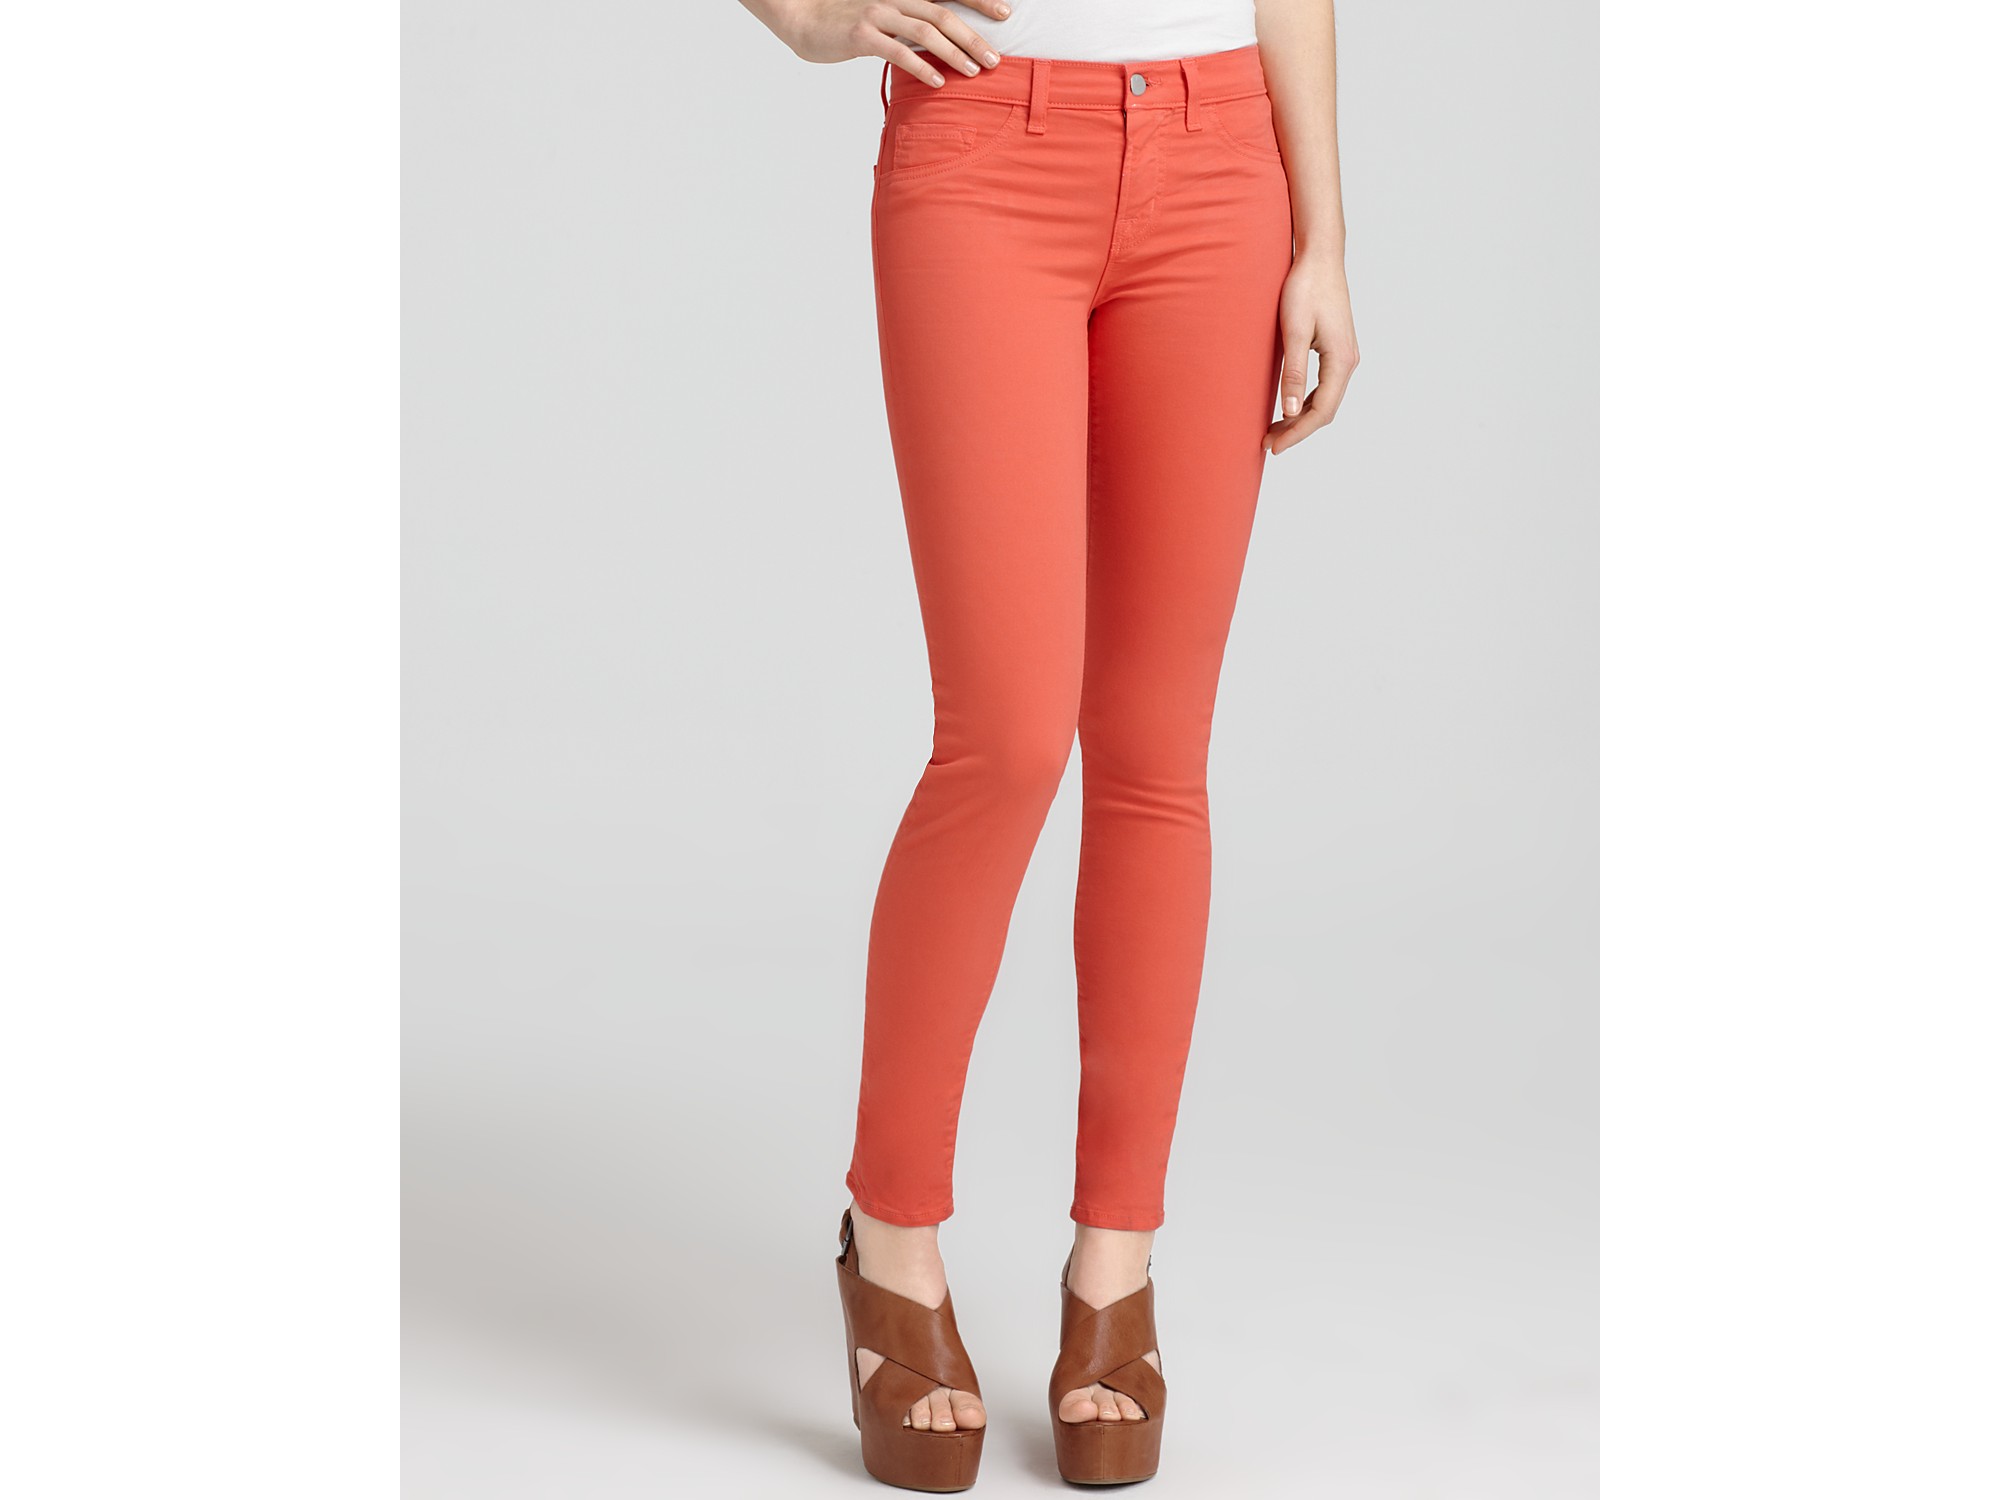 Lyst - J Brand 811 Mid Rise Luxe Twill Skinny Jeans in Orange